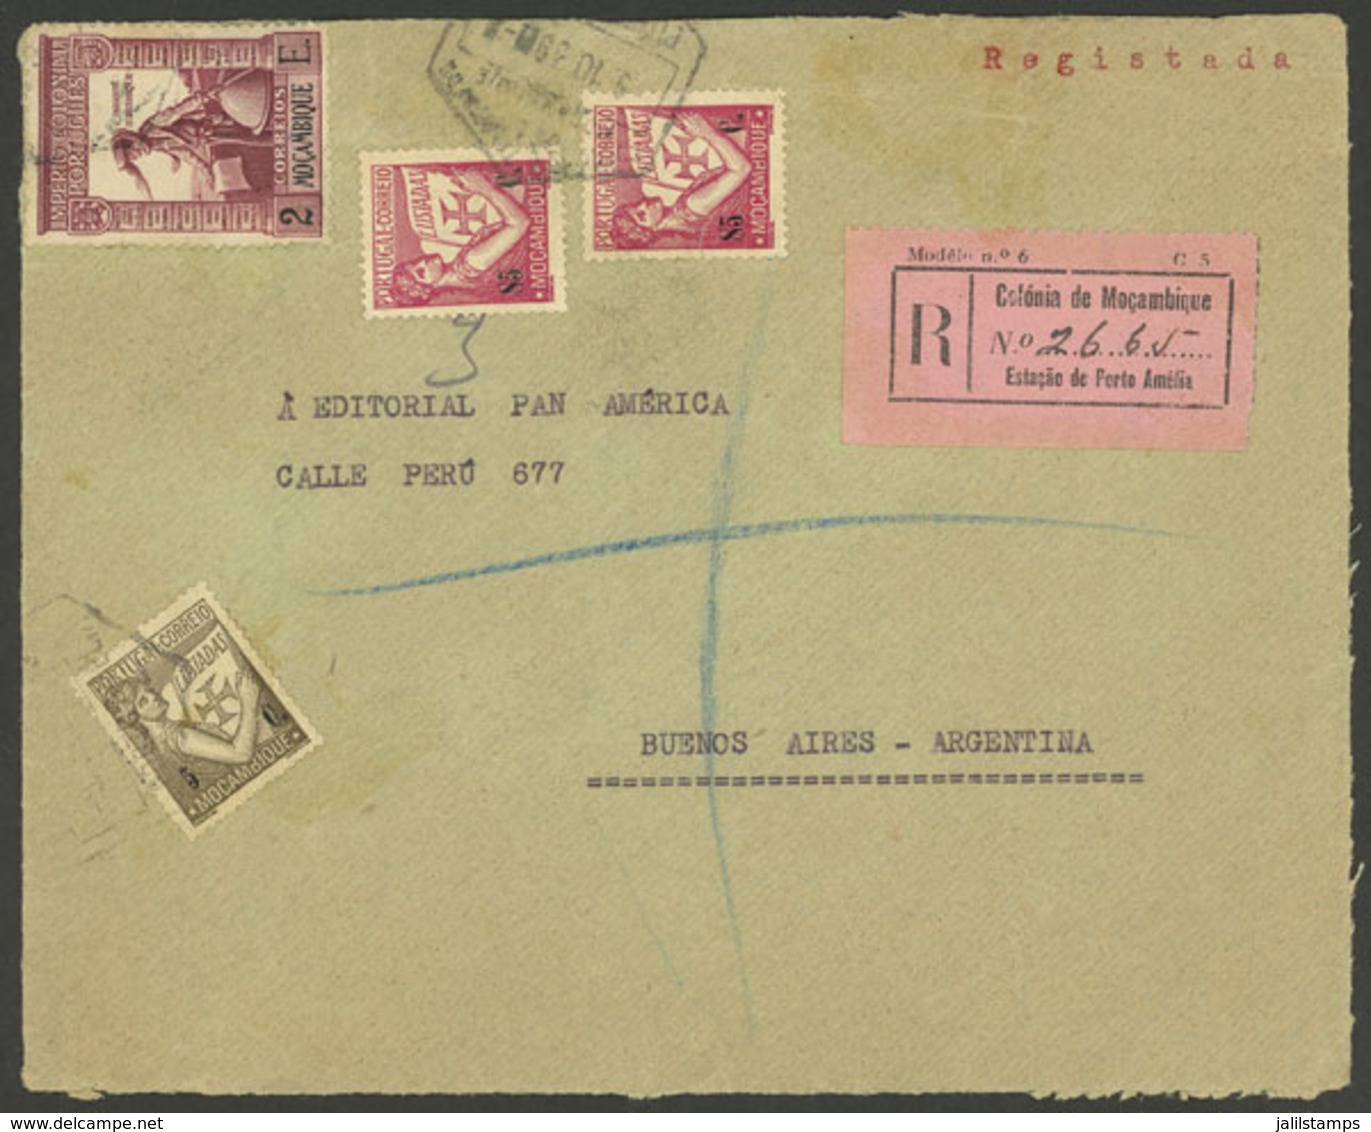 MOZAMBIQUE: Registered Cover Front Sent From Estaçao De Porto Amelia To Argentina On 3/OC/1939, Unusual Destination! - Mosambik